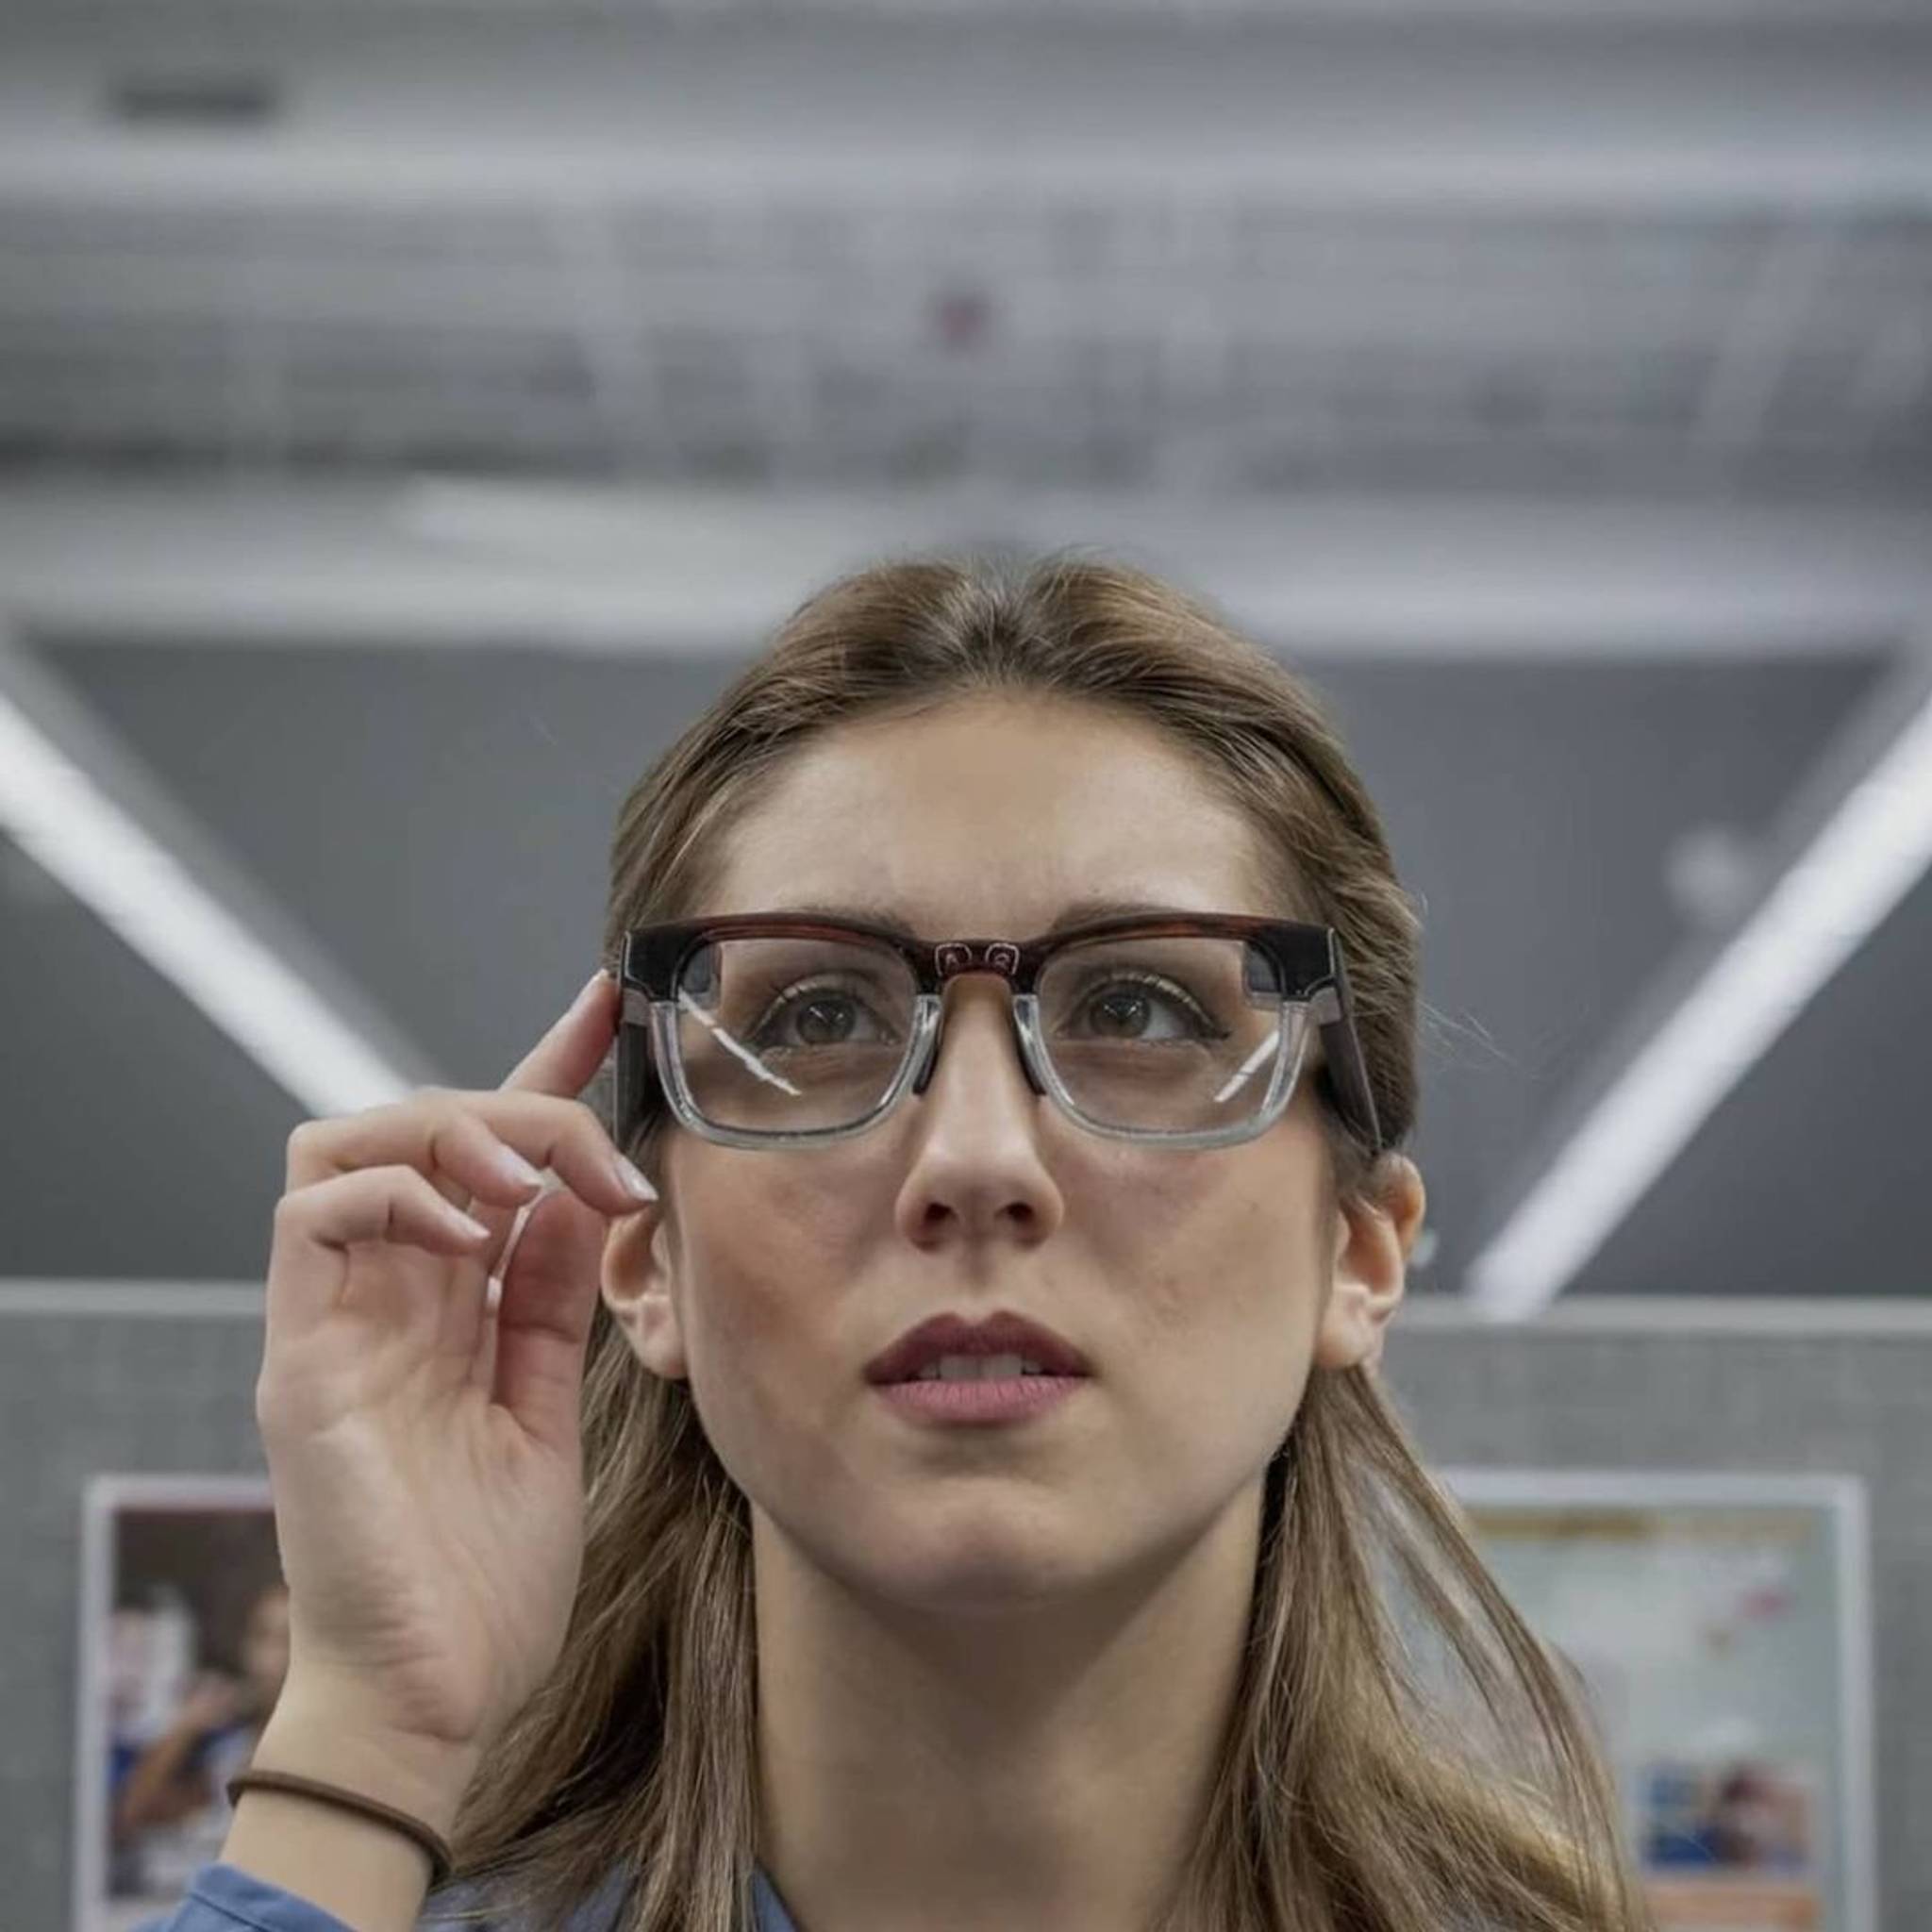 Vuzix micro-LED glasses enable smarter working